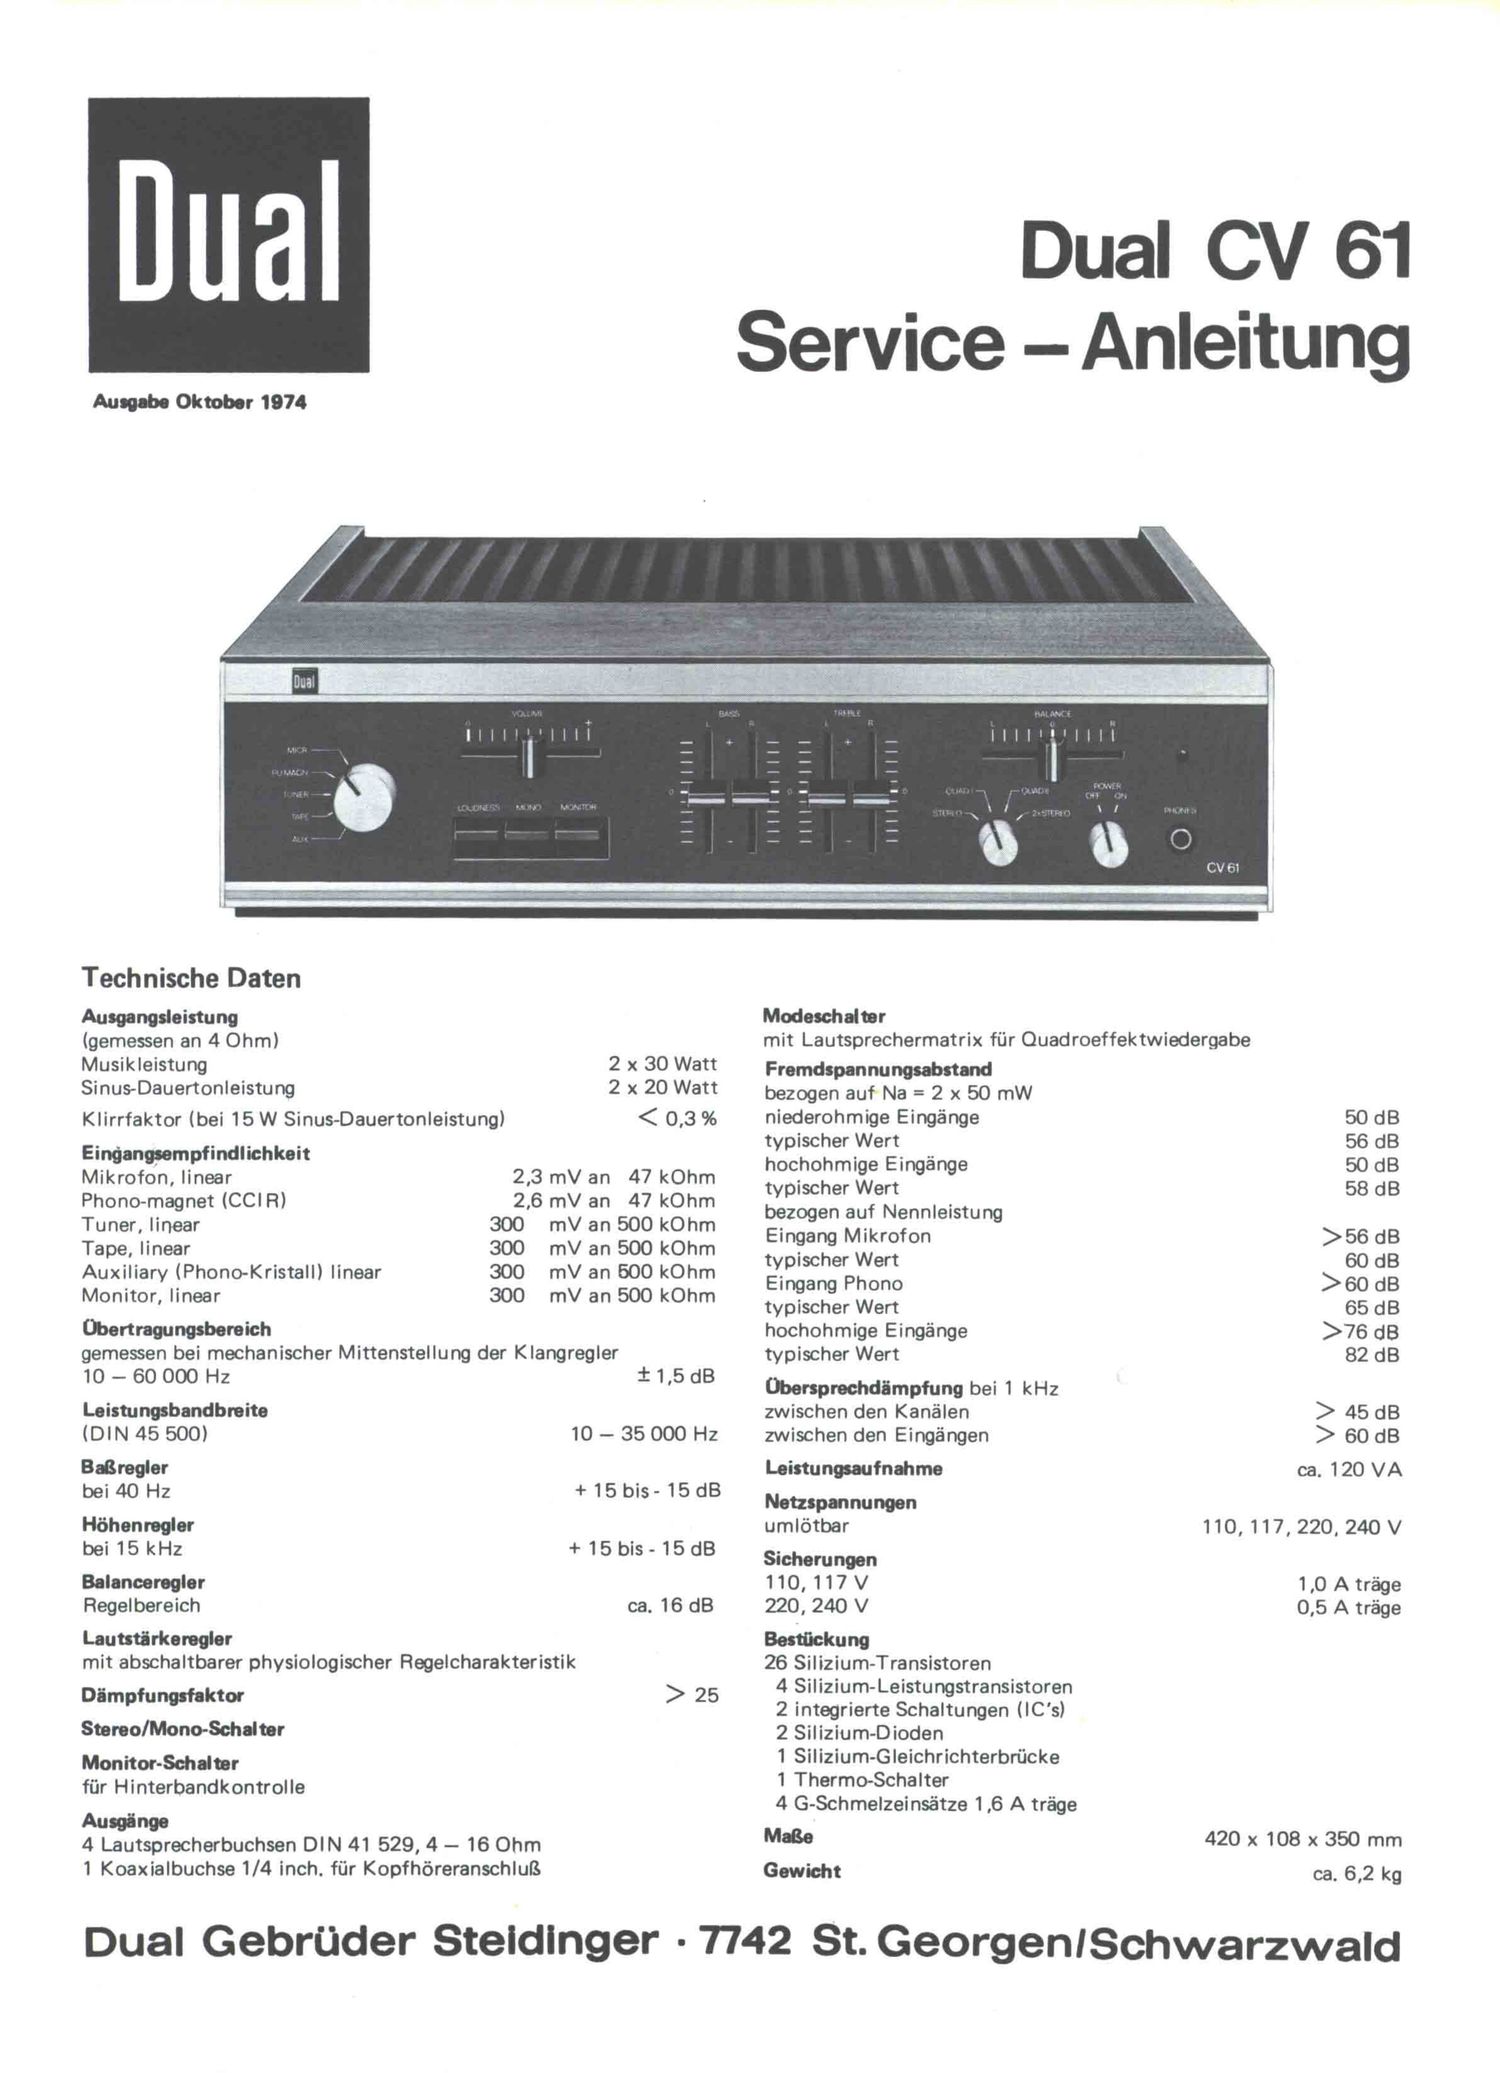 Dual CV 61 Service Manual